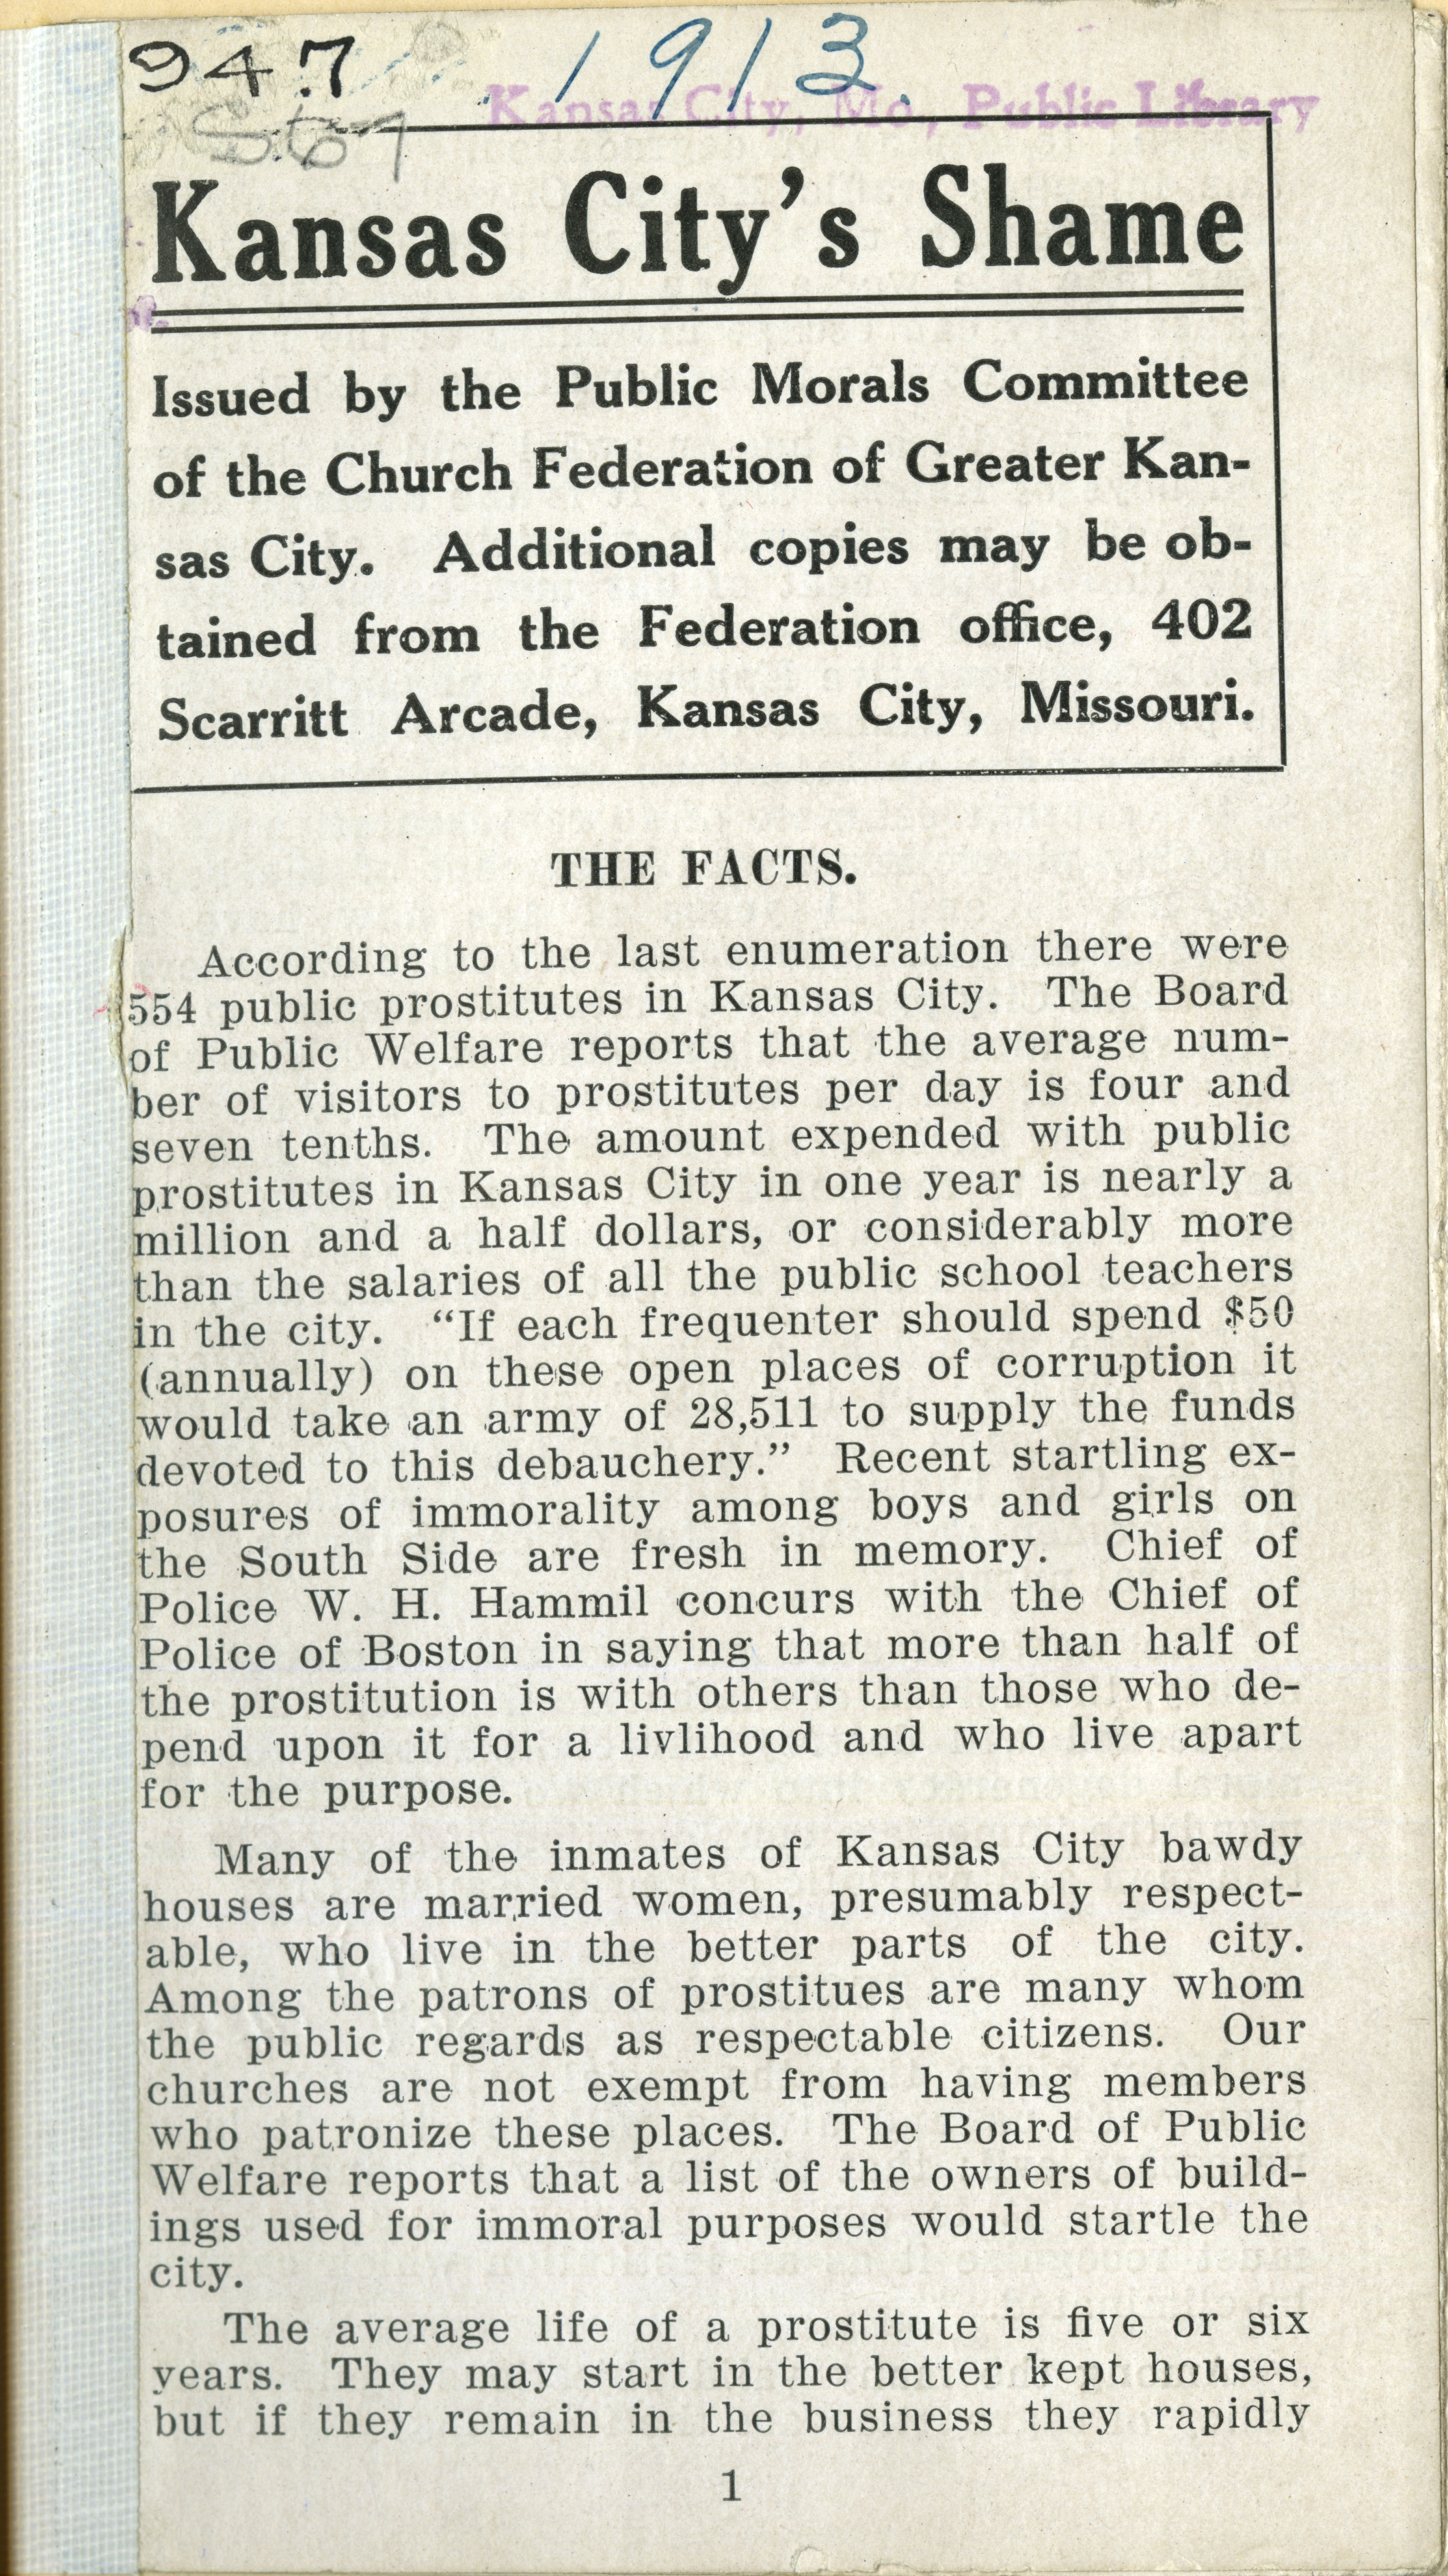 Kansas City's Shame, 1913 pamphlet on vice in Kansas City